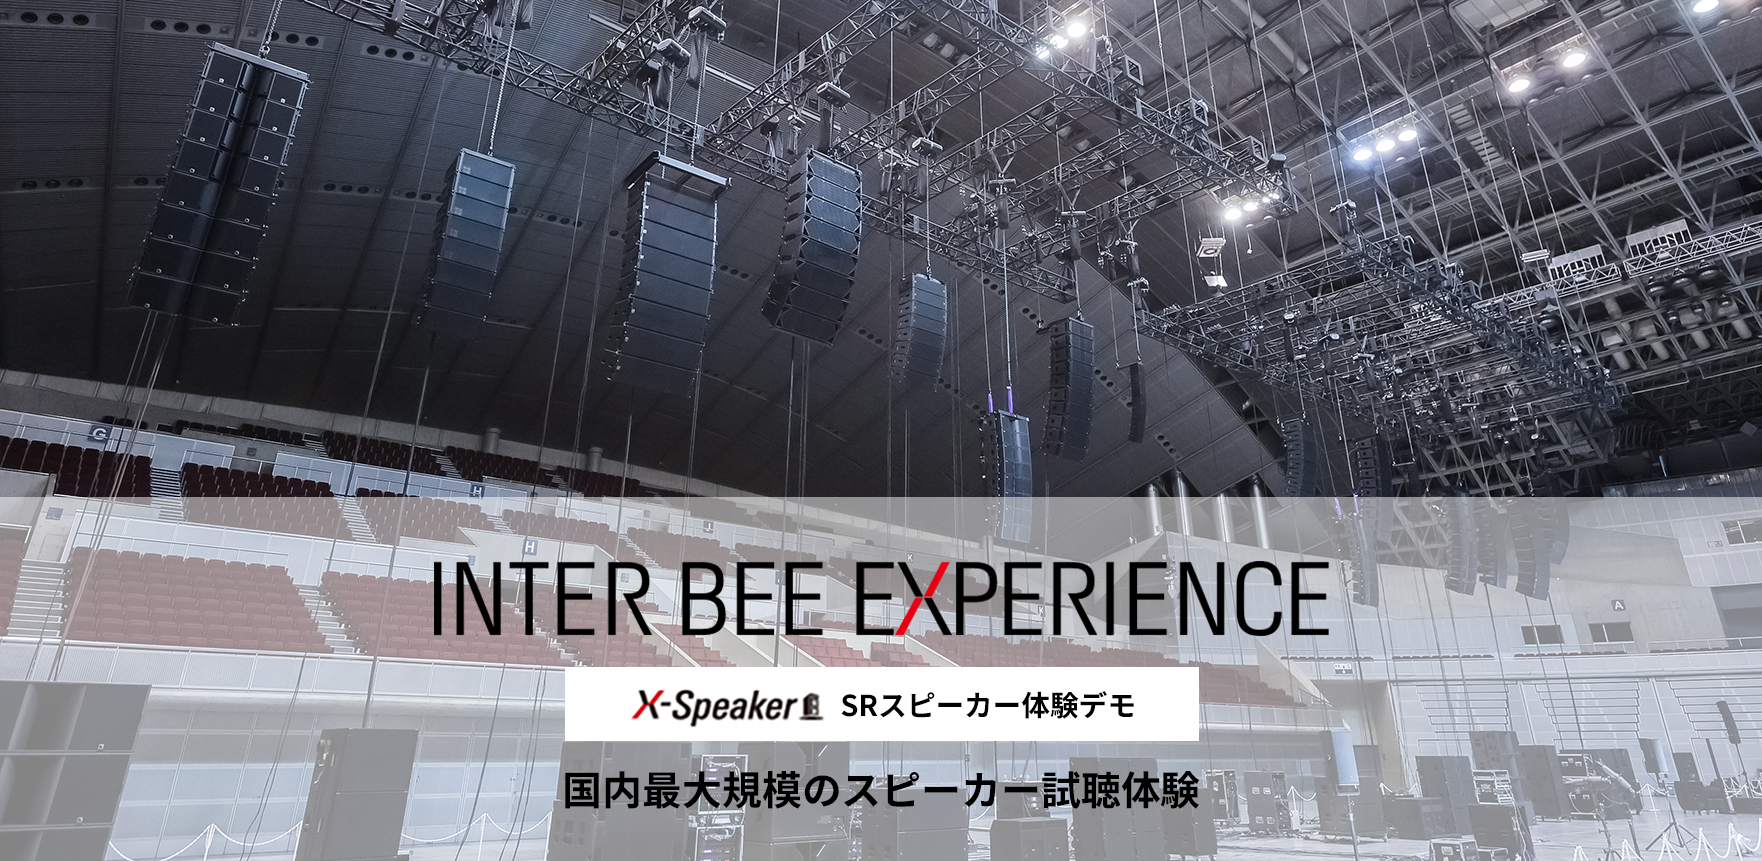 INTER BEE EXPERIENCE メインビジュアル